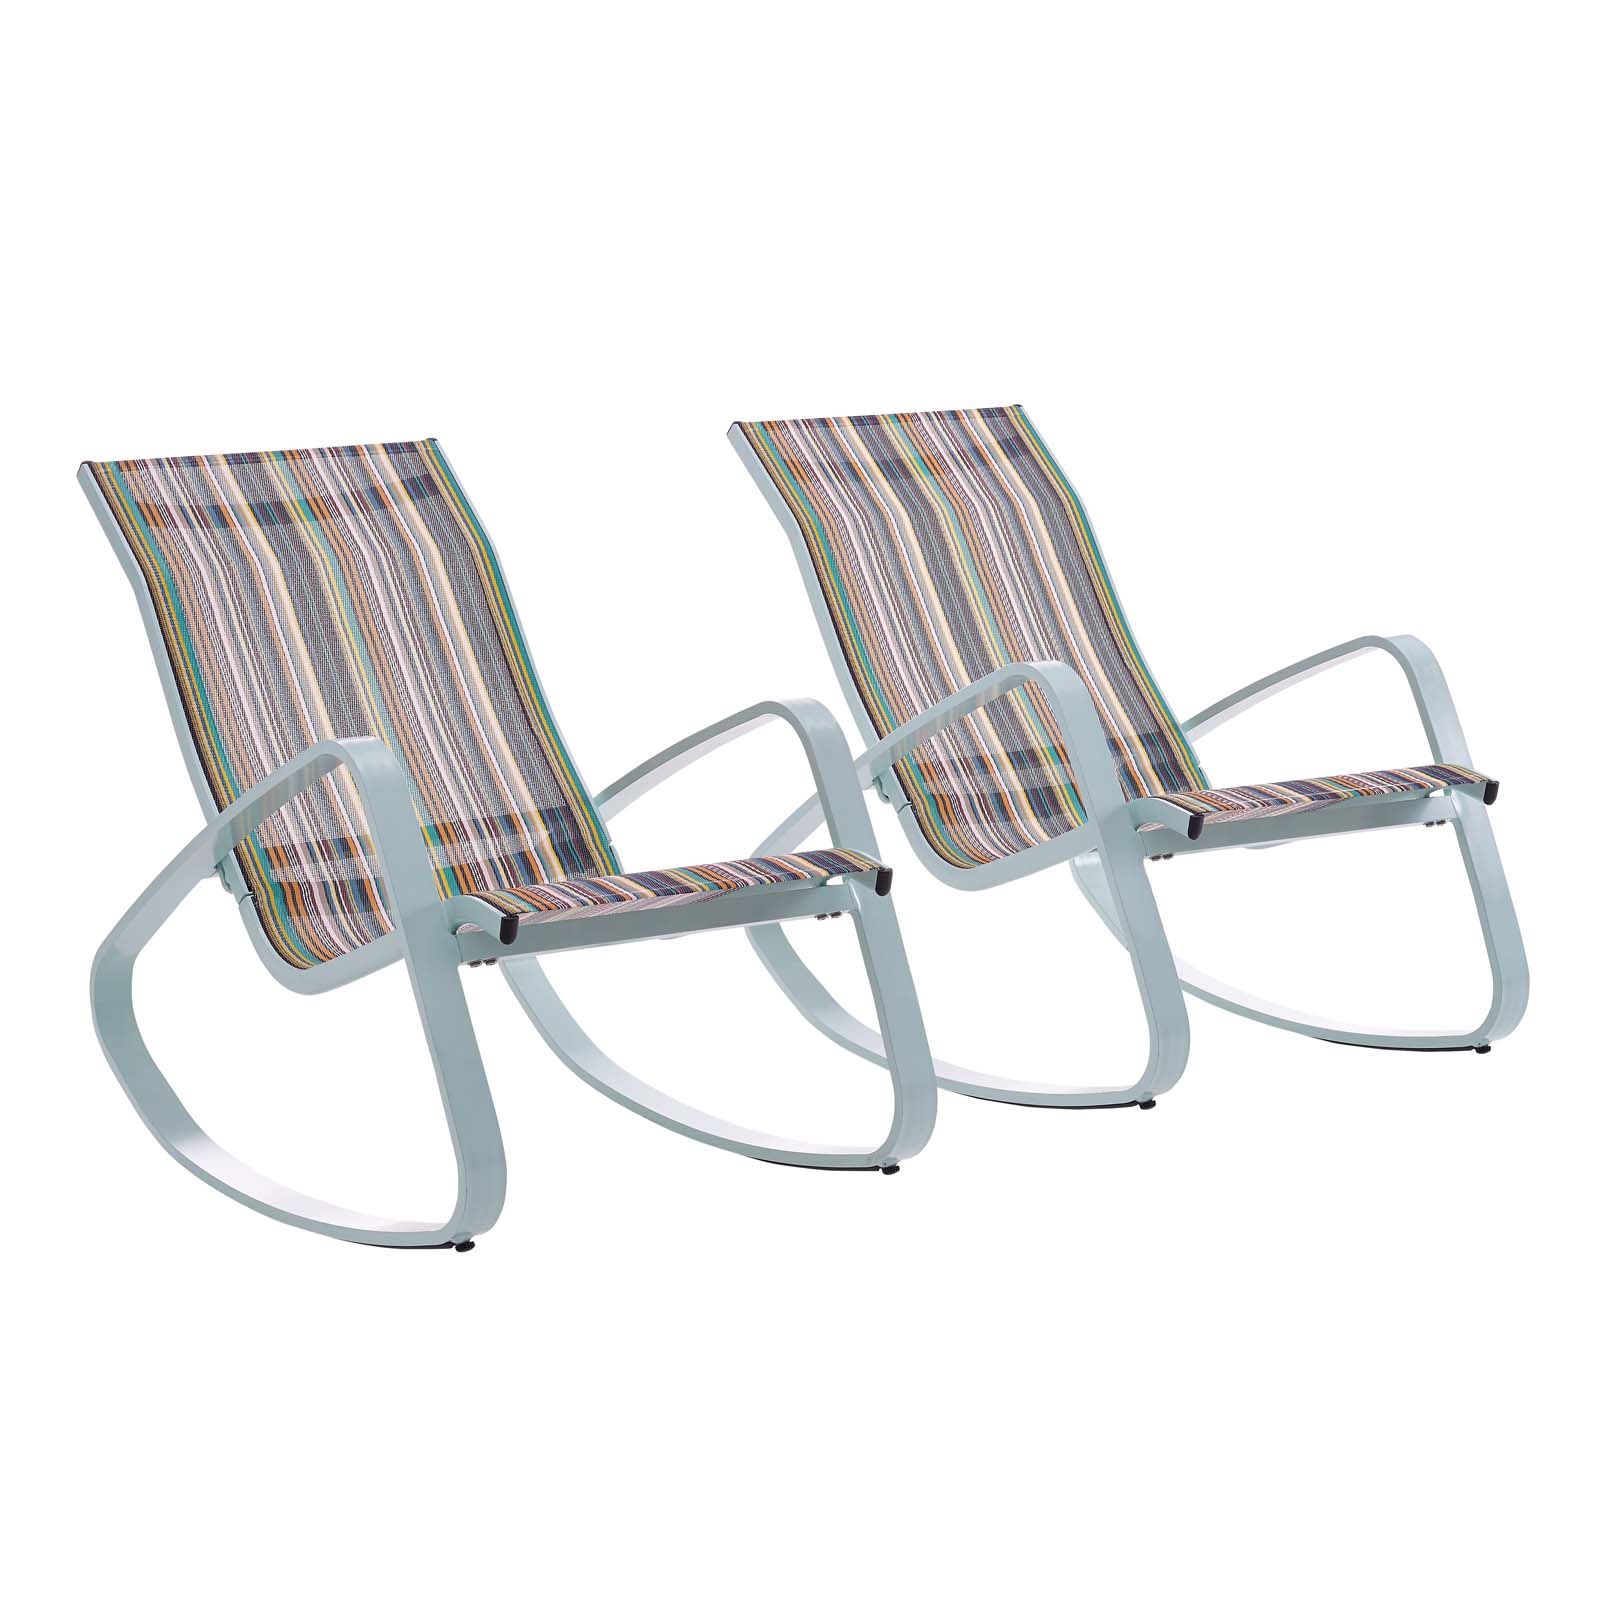 Modway Traveler Rocking Lounge Chair Outdoor Patio Mesh Sling Set of 2 in Green Stripe - image 2 of 6